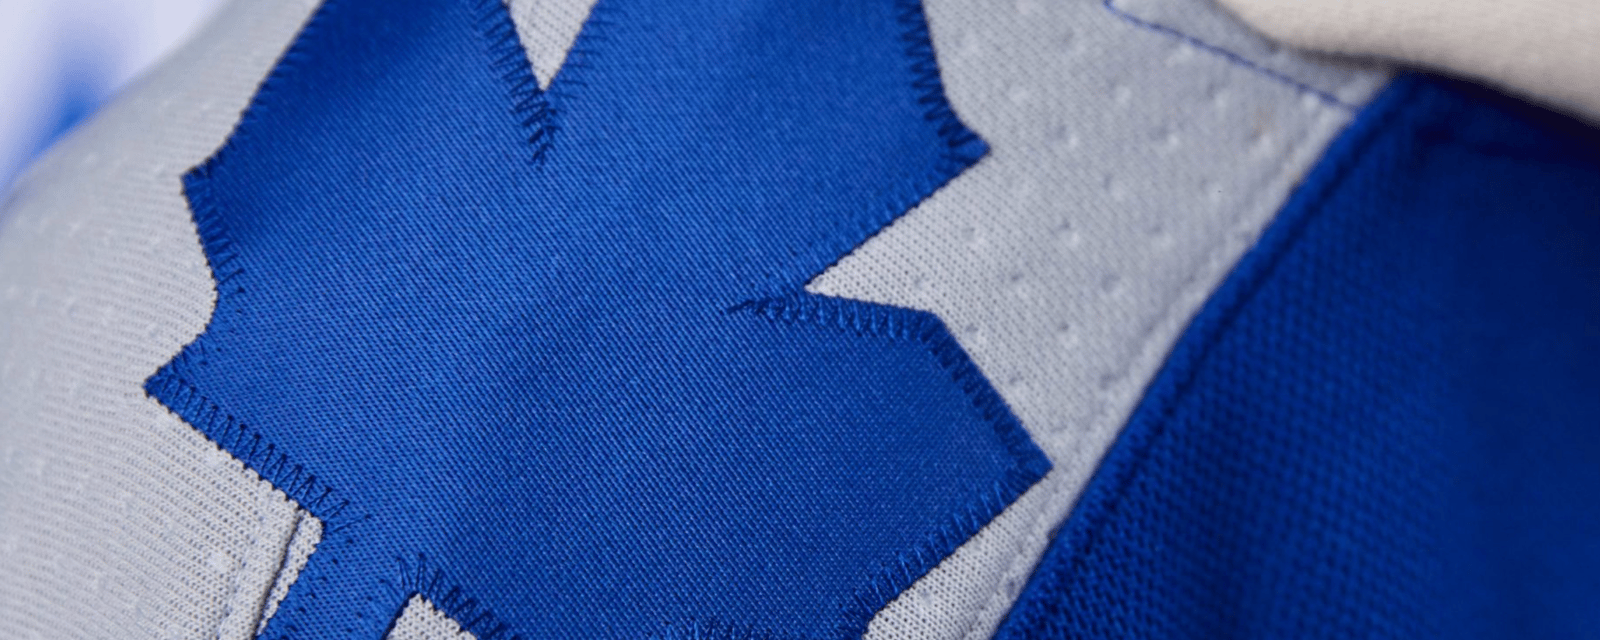 Maple Leafs mourn death of former goaltender 